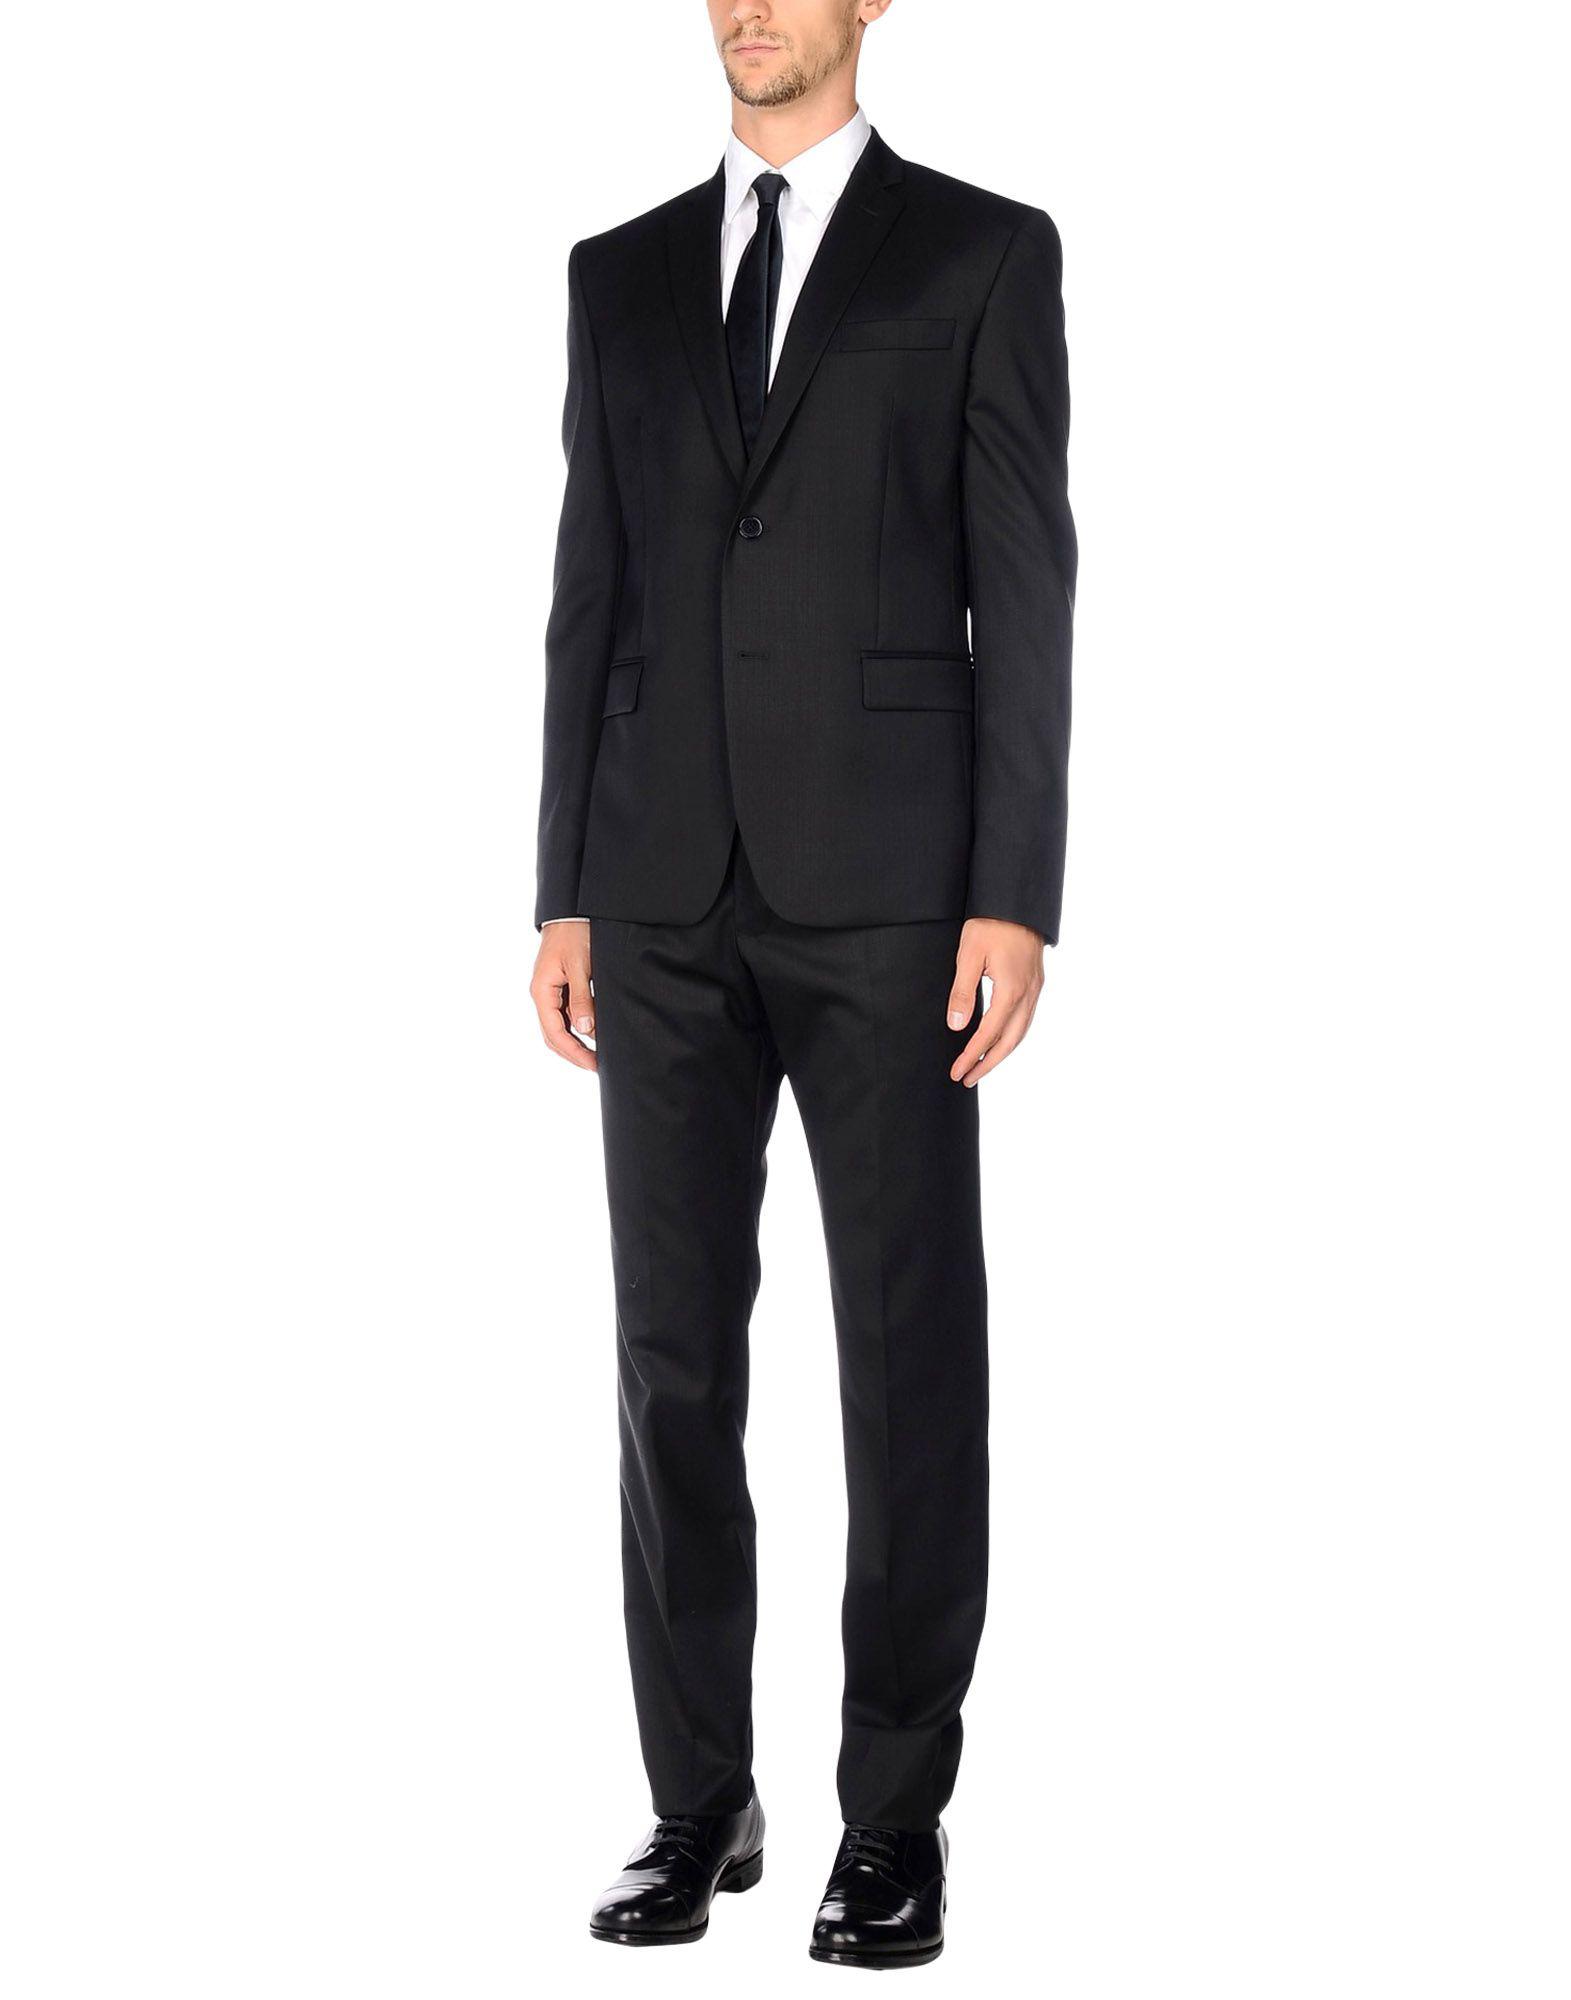 Versace Wool Suit in Black for Men - Lyst